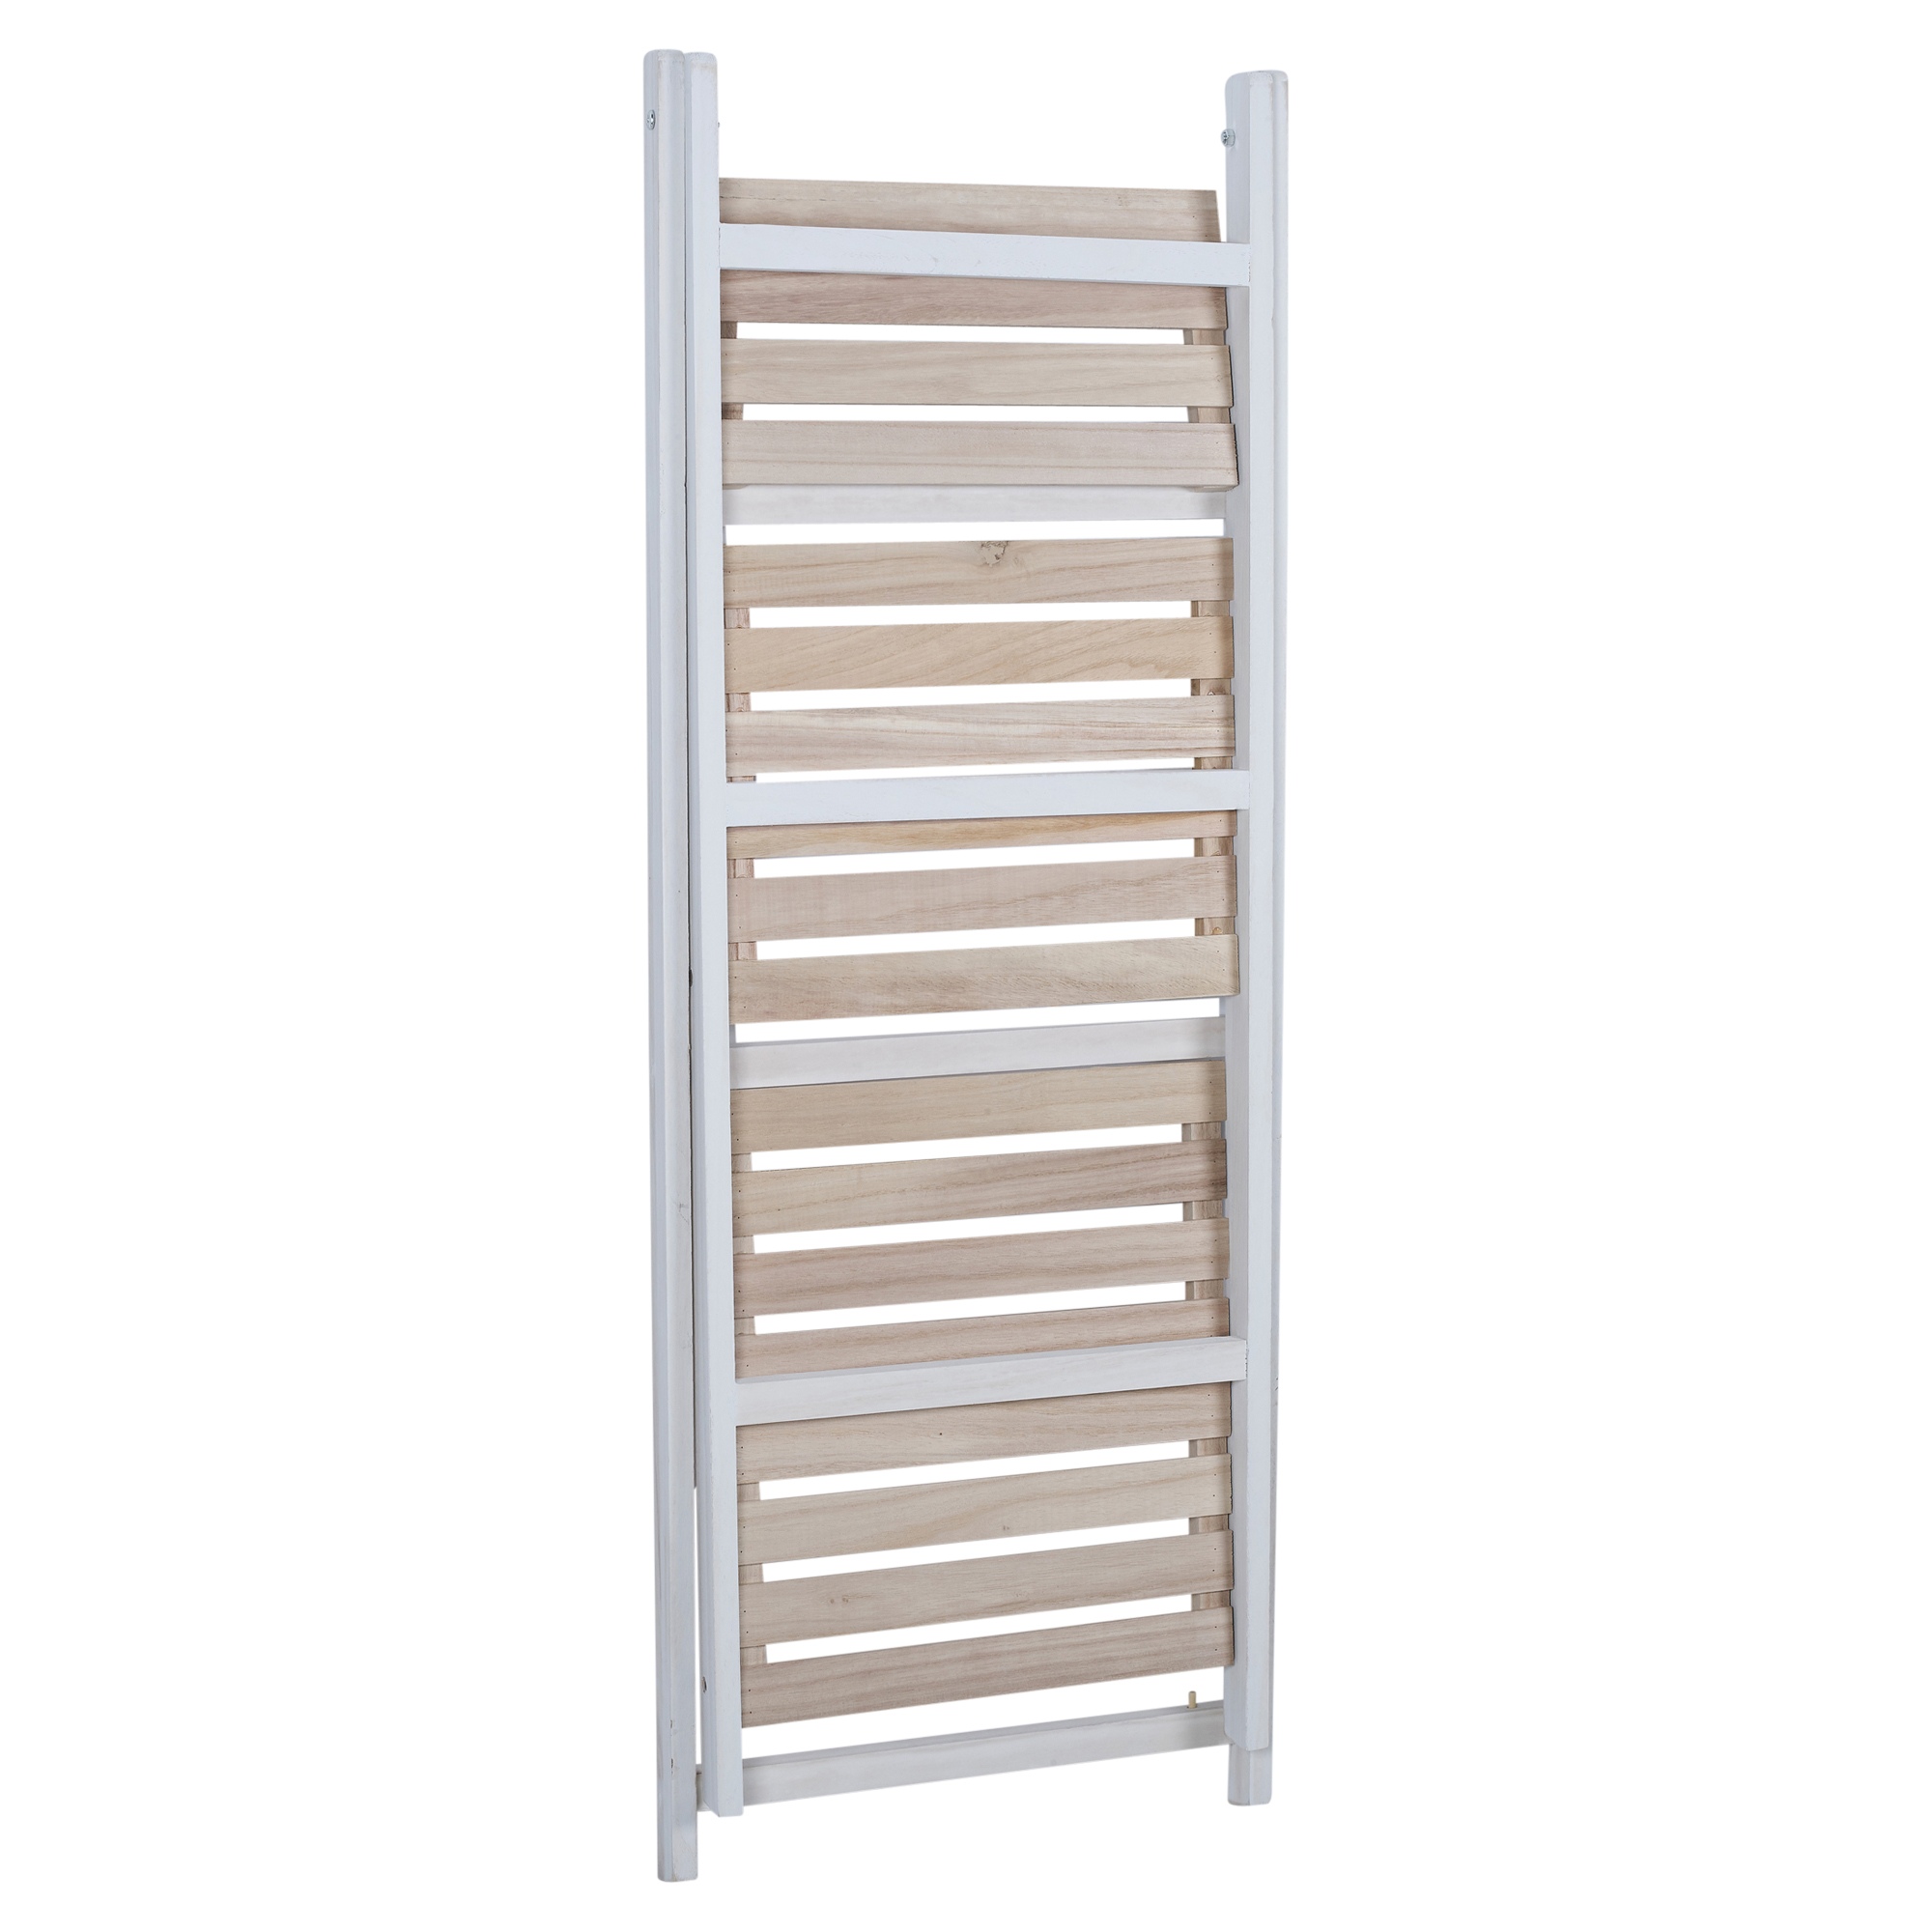 3 layer folding wooden tier shelf rack home bathroom